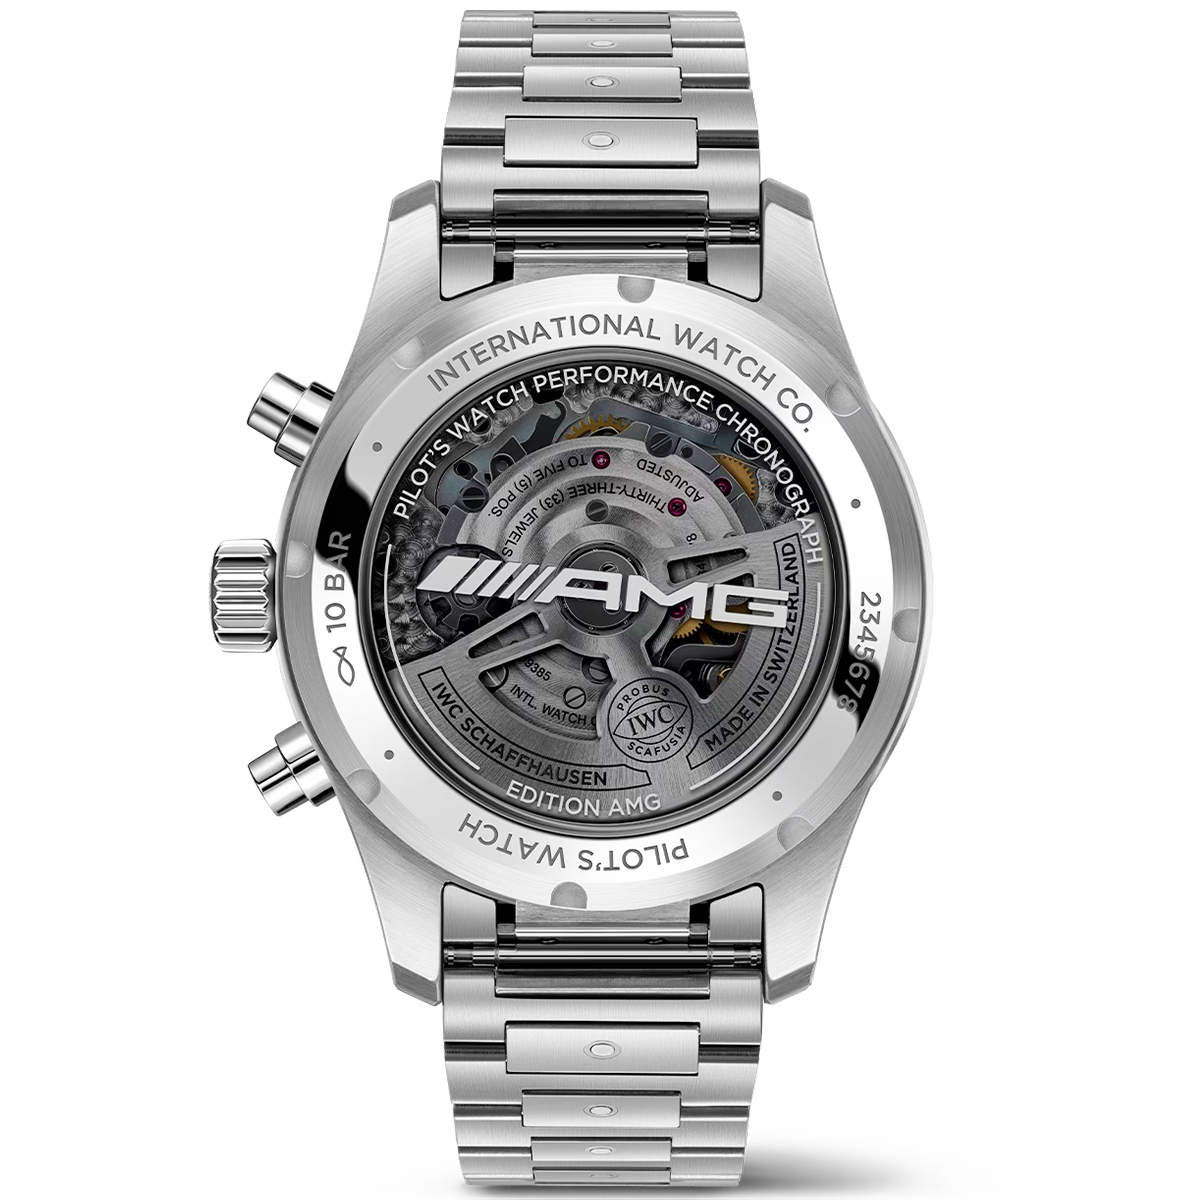 Pilot's 41mm Black Dial AMG Performance Chronograph Bracelet Watch